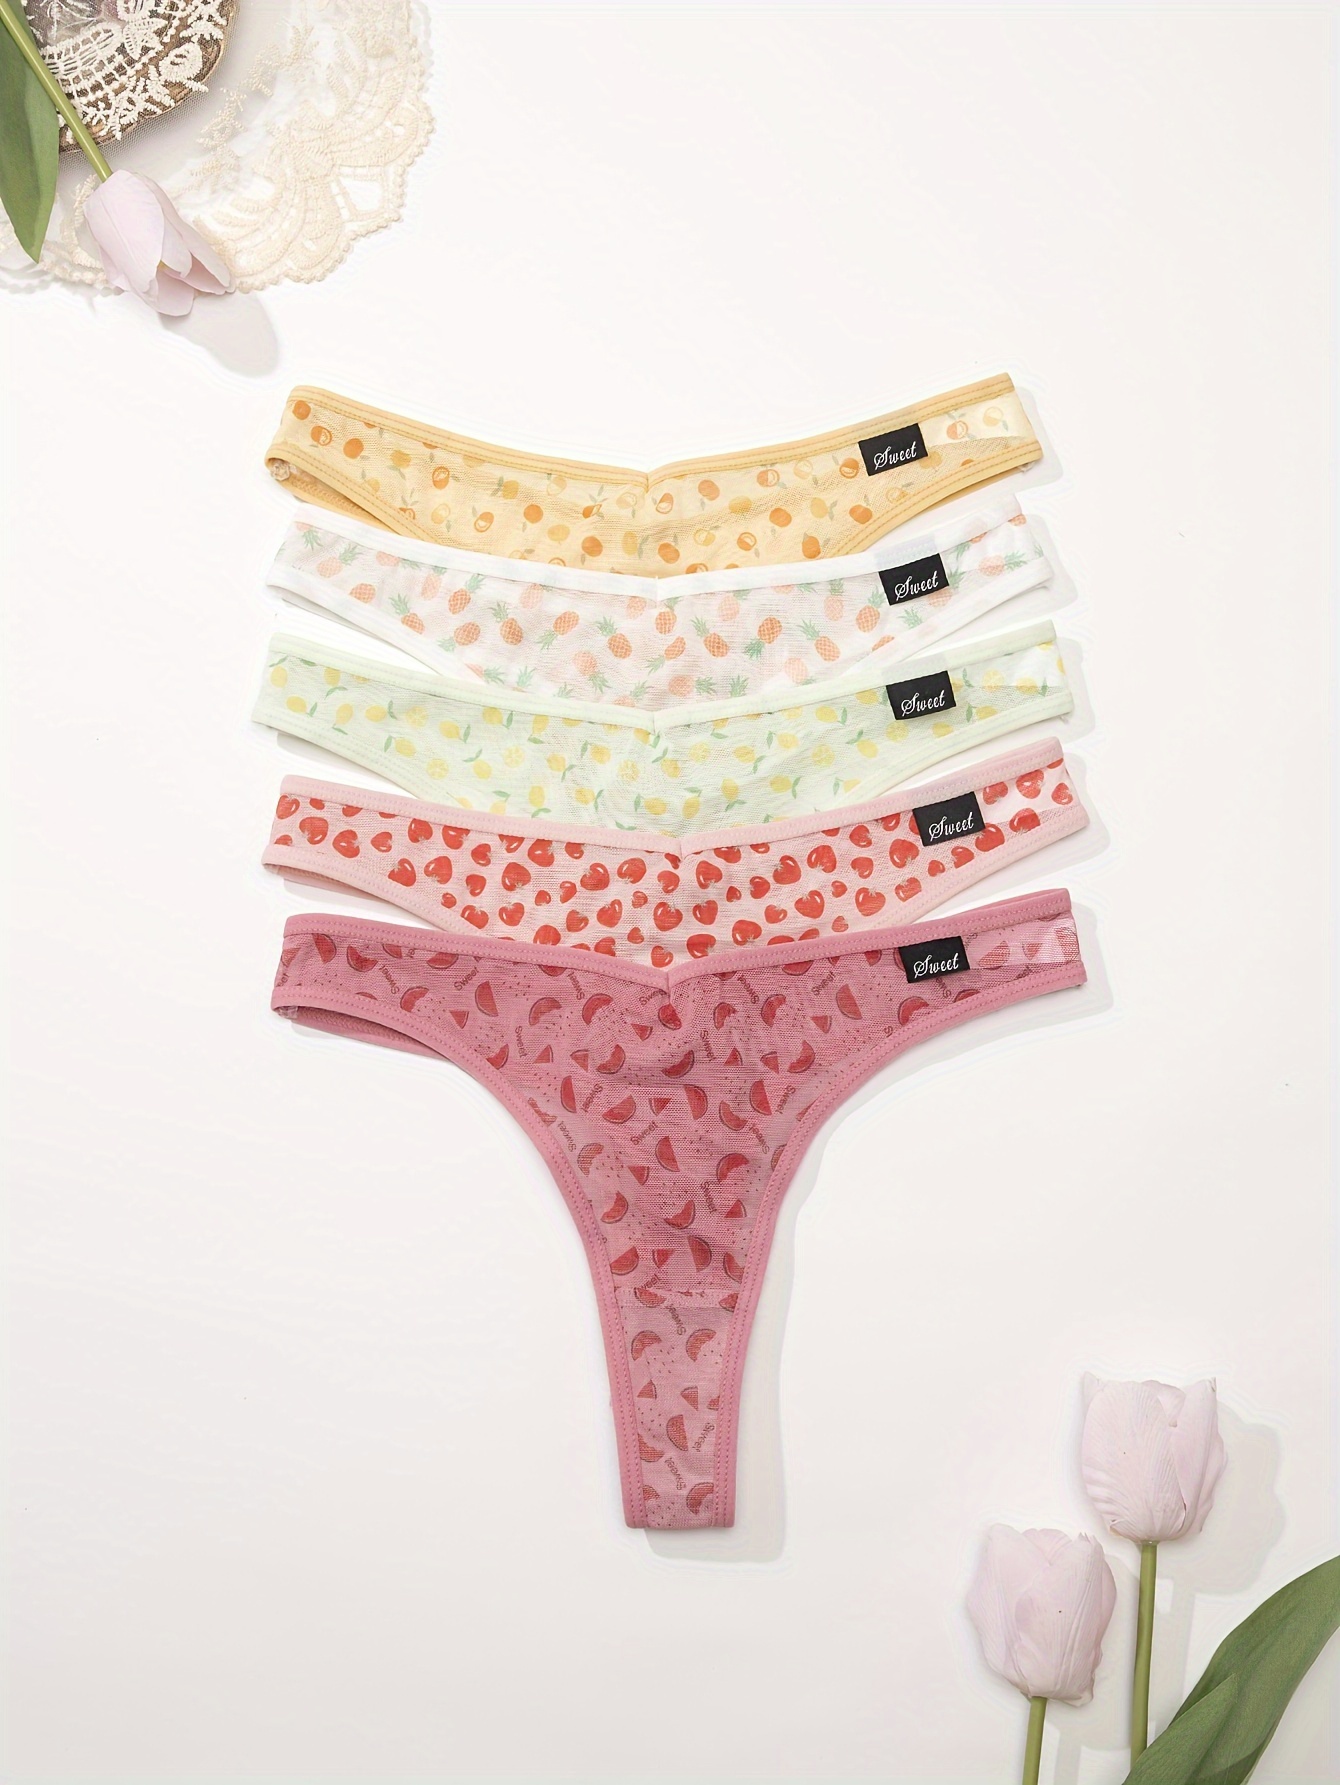 Buy Fruit of the Loom Girls Underwear, 12 Pack, Seamless Underwear